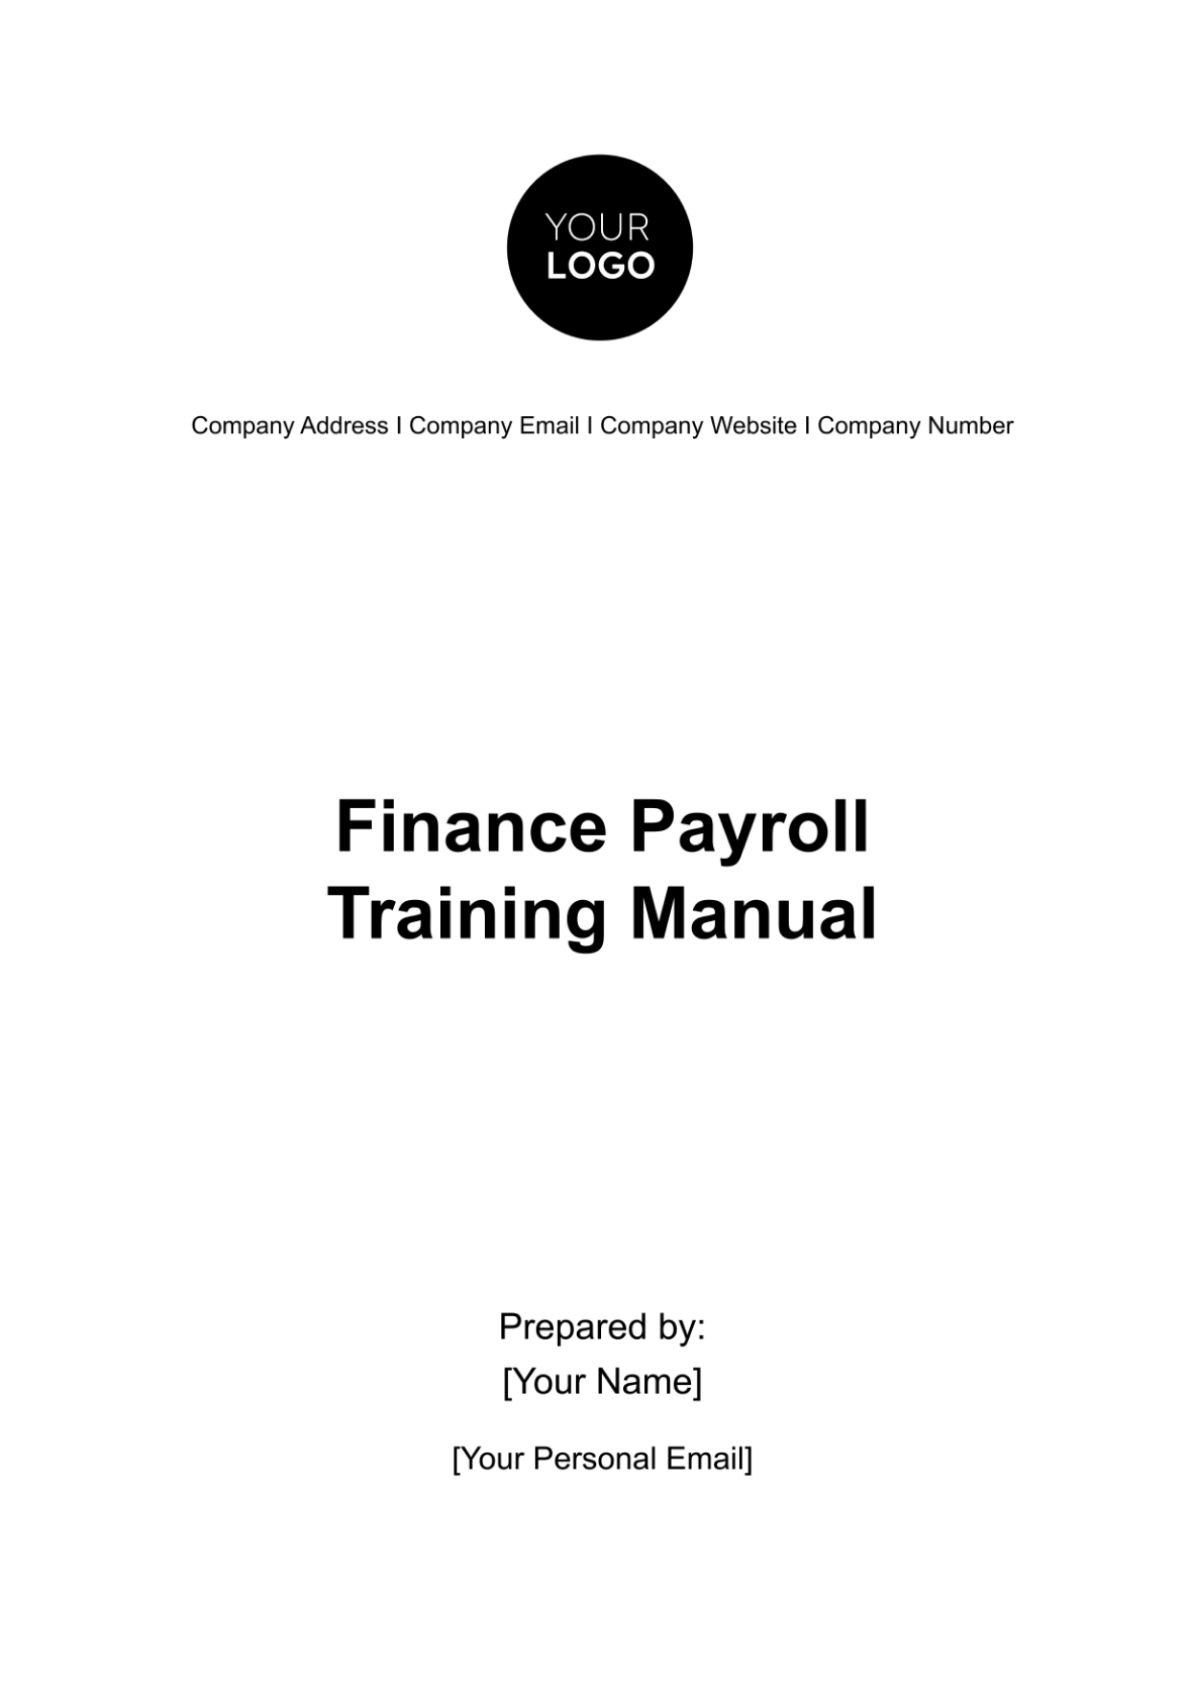 Finance Payroll Training Manual Template